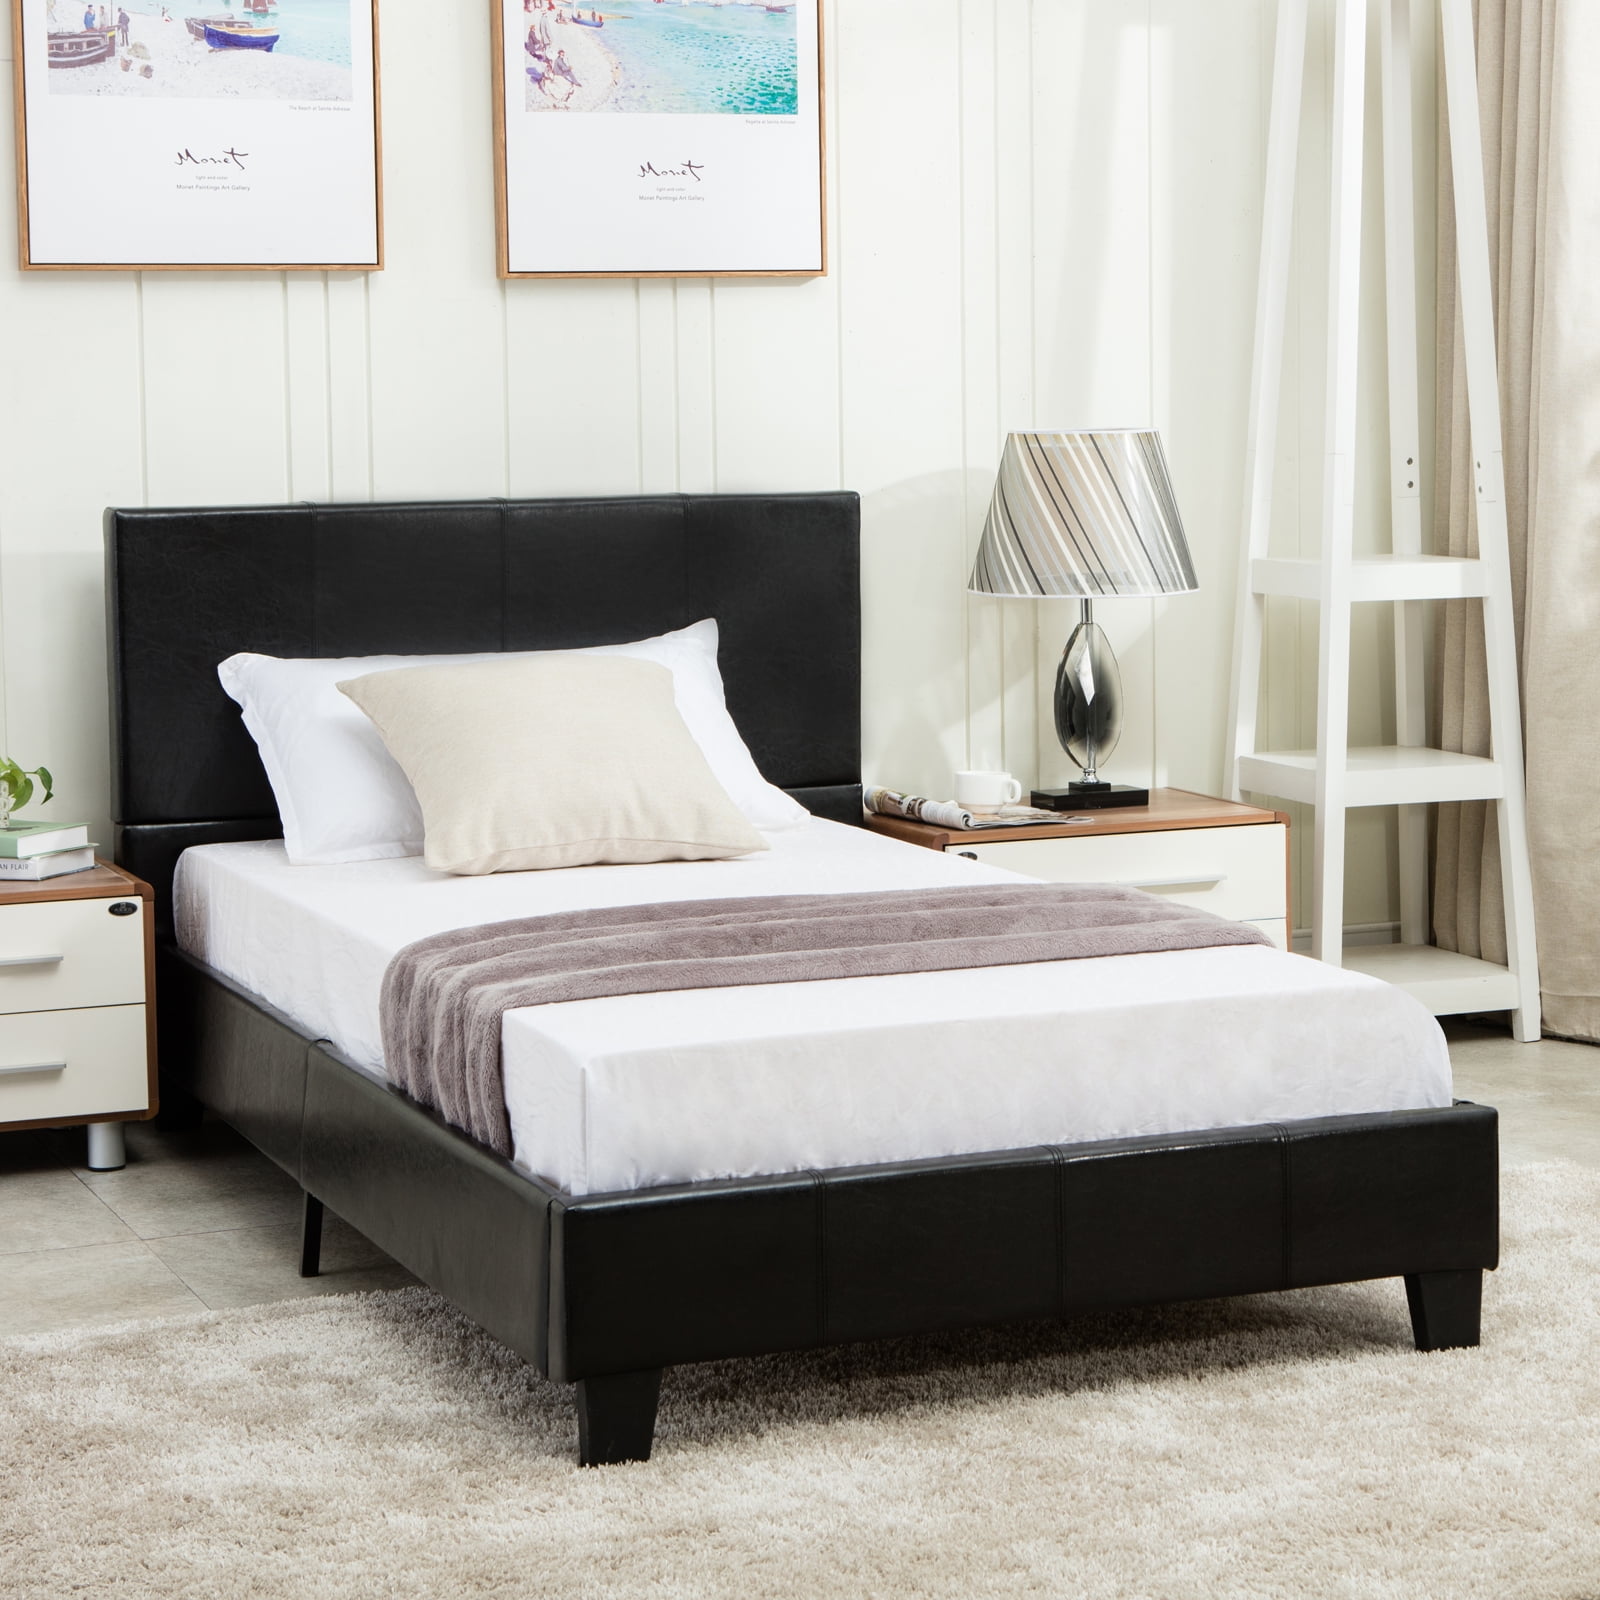 Mecor Bed Upholstered Headboard Bedroom, Black Upholstered Twin Bed Frame